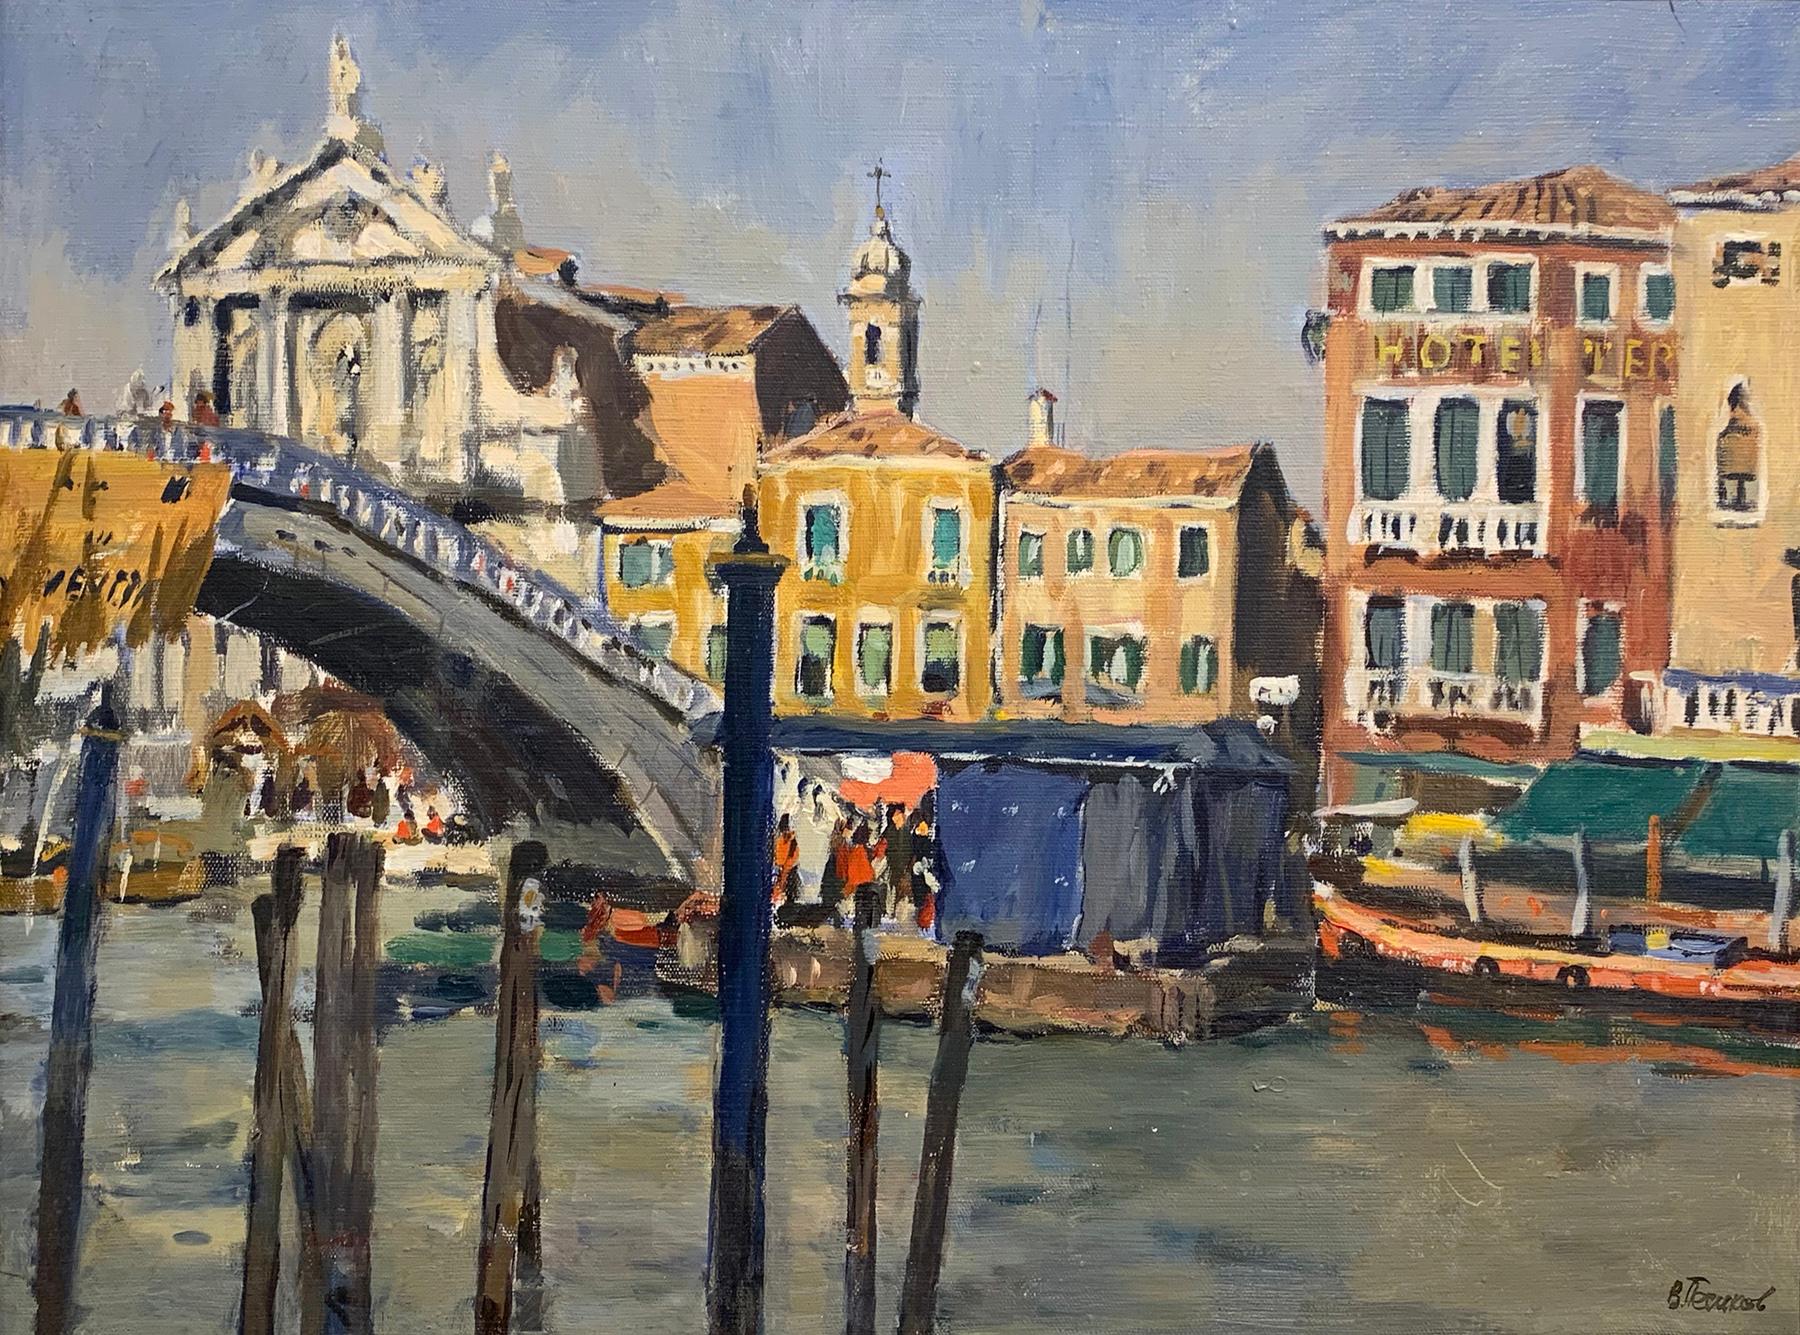 Venice. Grand canal. 1978